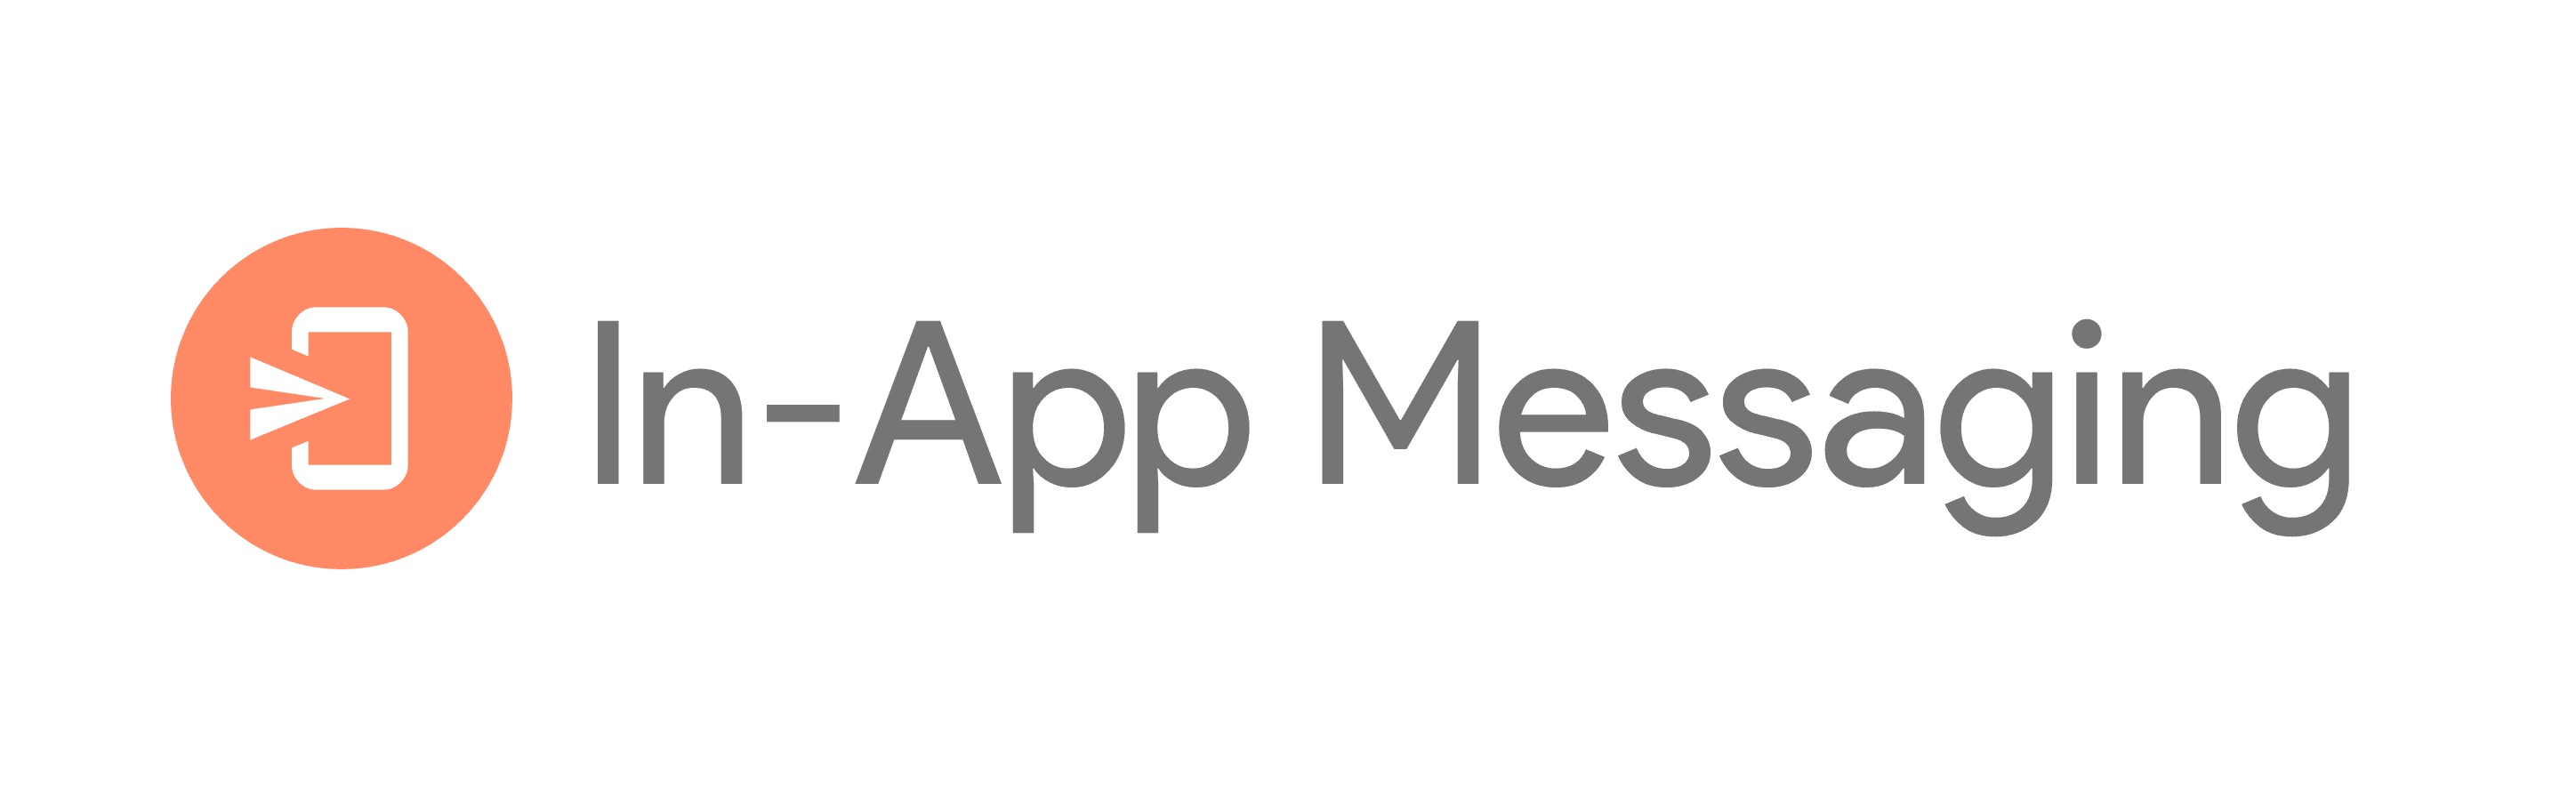 Firebase In-App Messaging.png